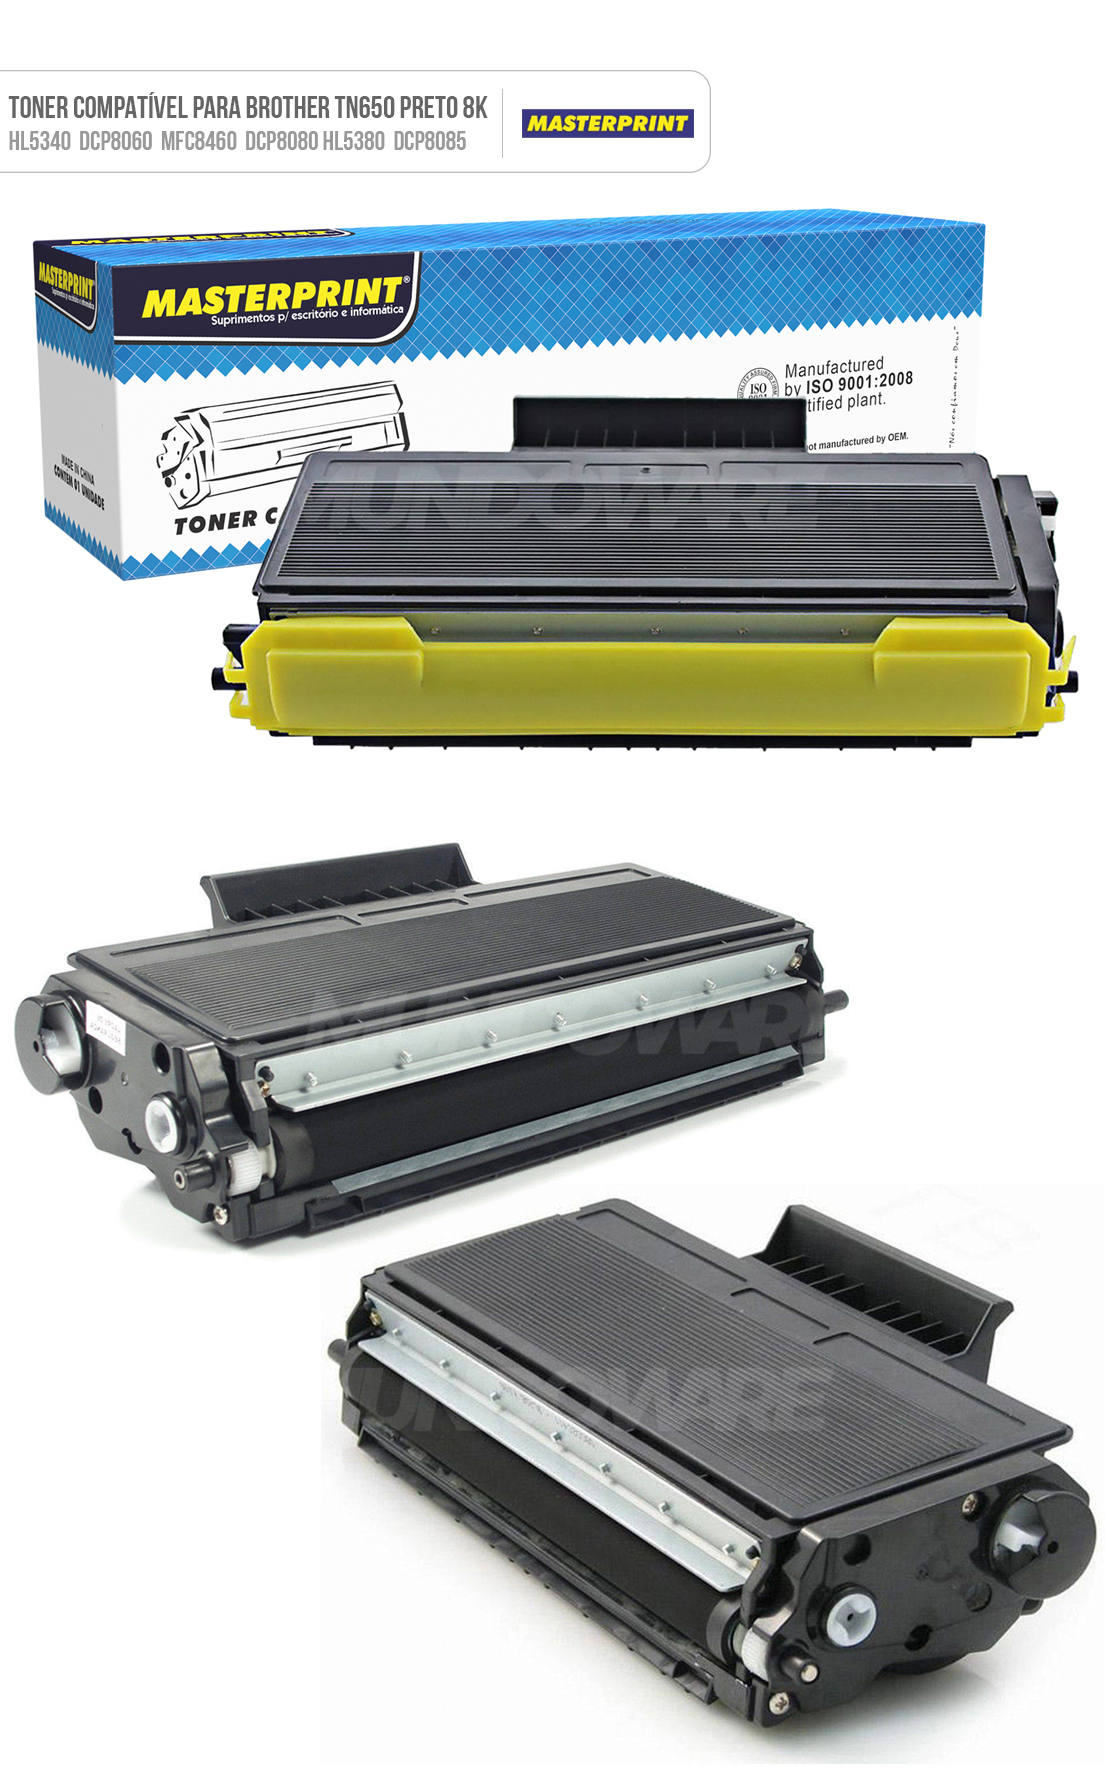 Toner Compatível para Brother TN-650 TN-620 TN-580 para HL-5350 DCP-8065 DCP-8080 DCP-8085 Masterprint Preto 8.000